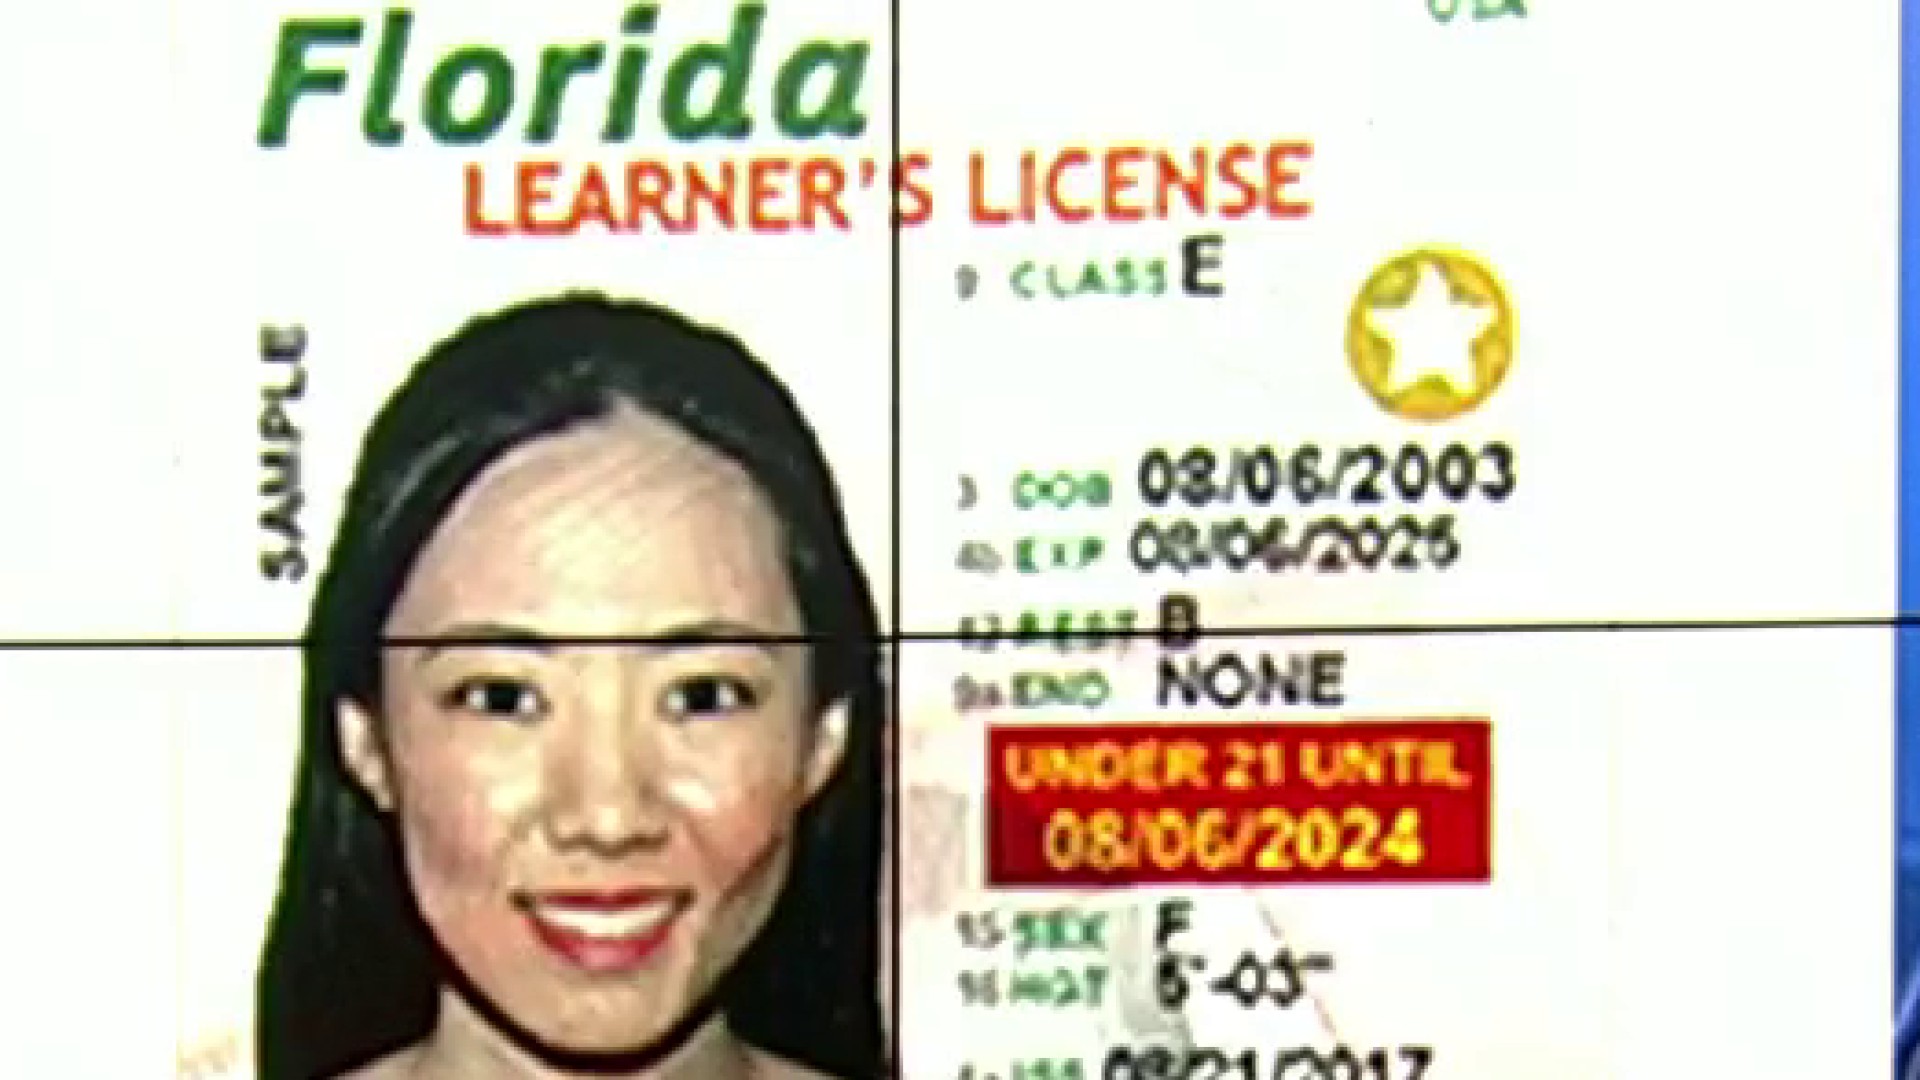 fl dmv driver license check